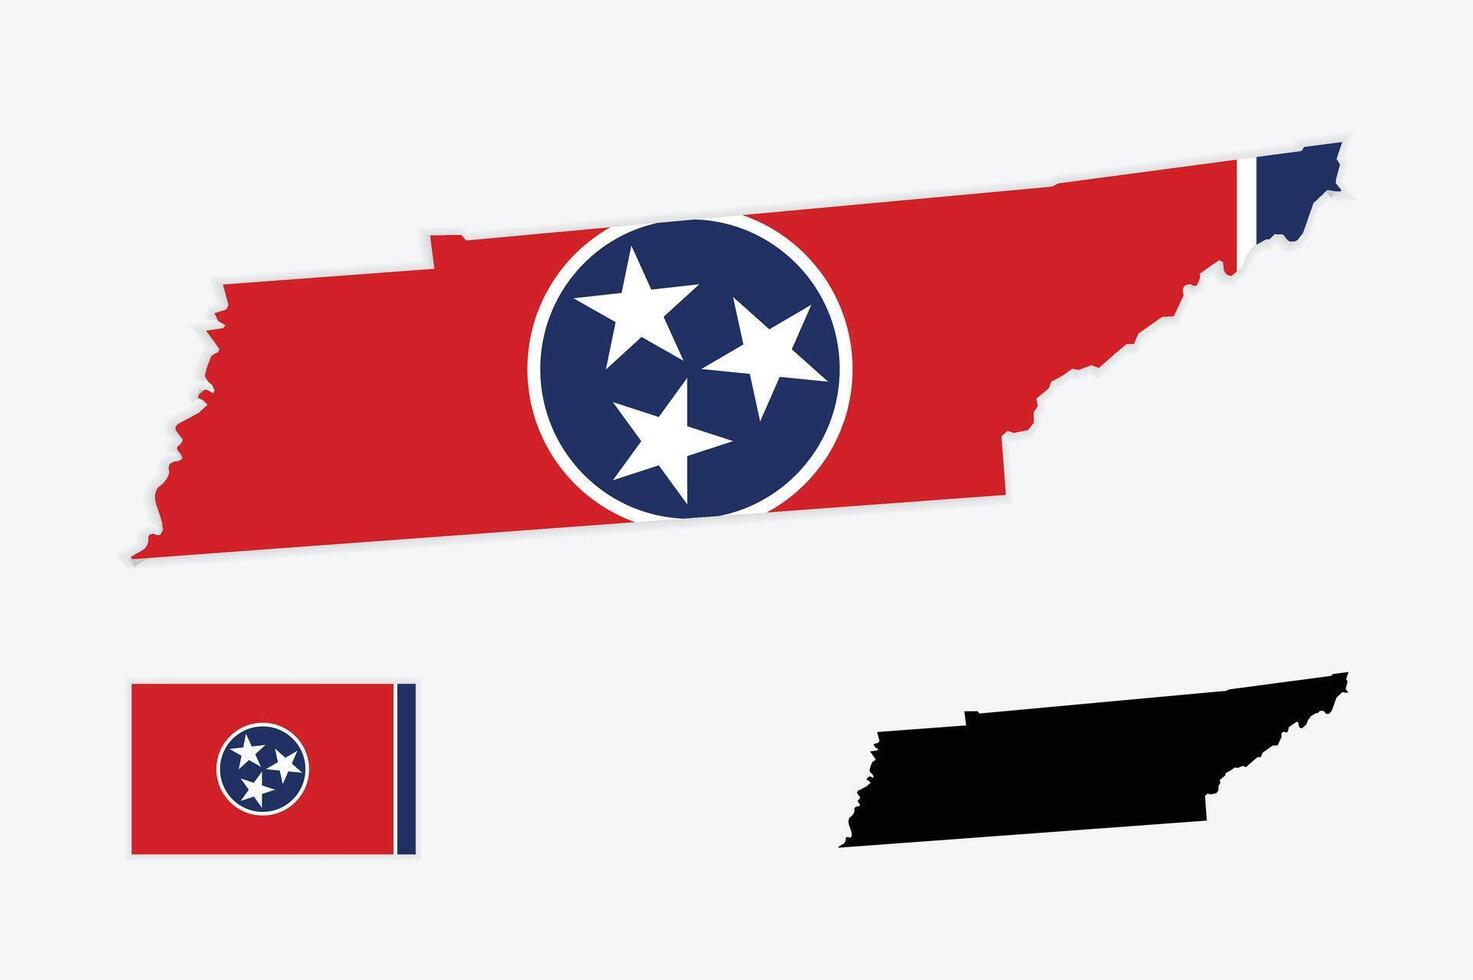 Tennessee bandeira com mapa. vetor